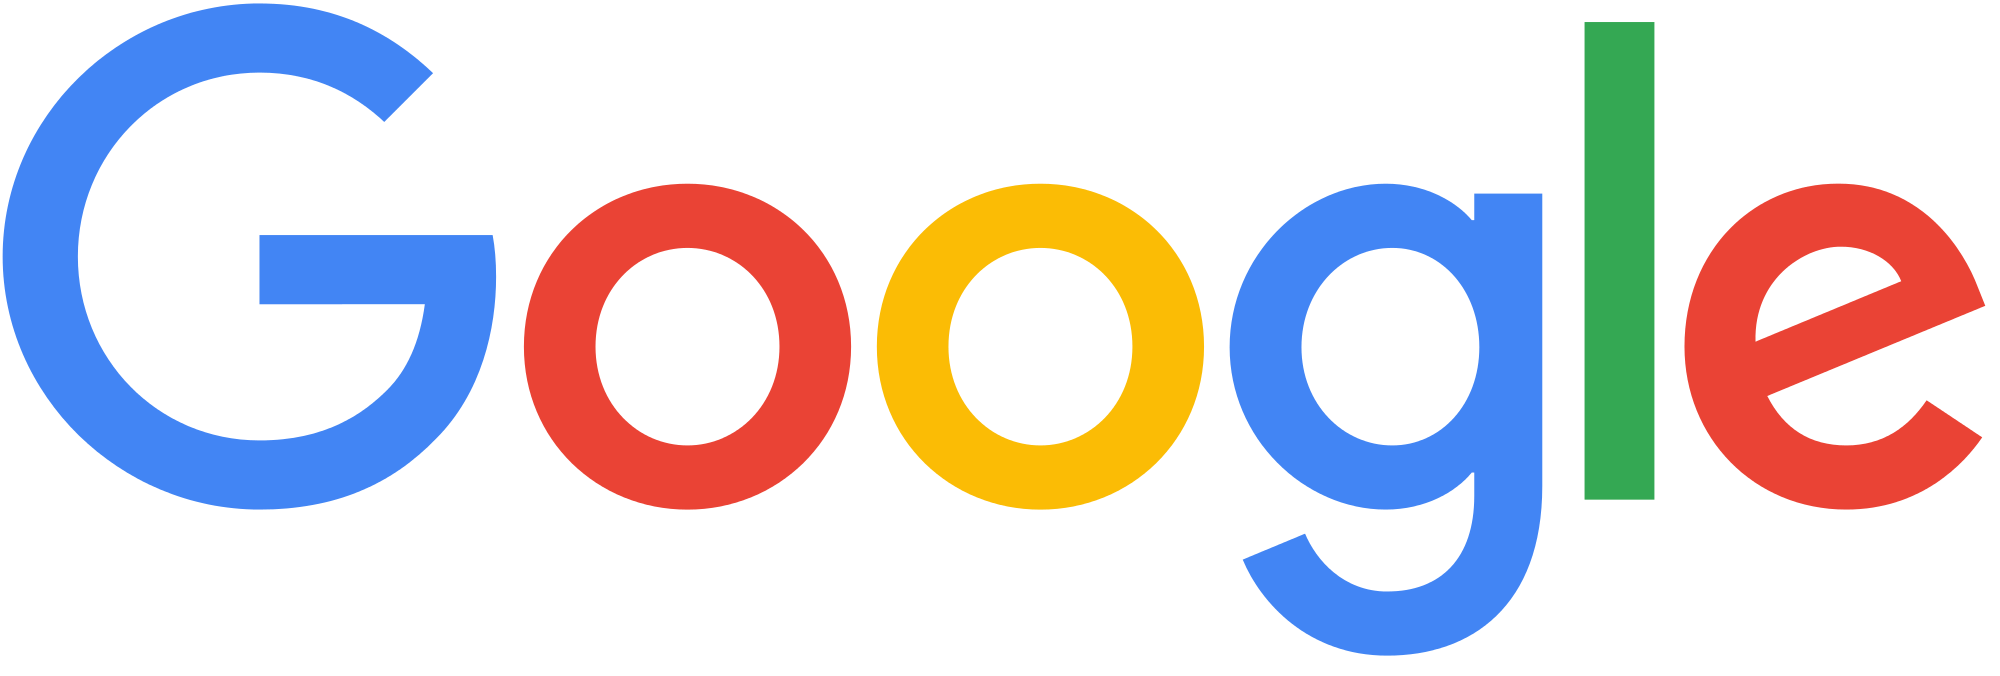 casistema-google